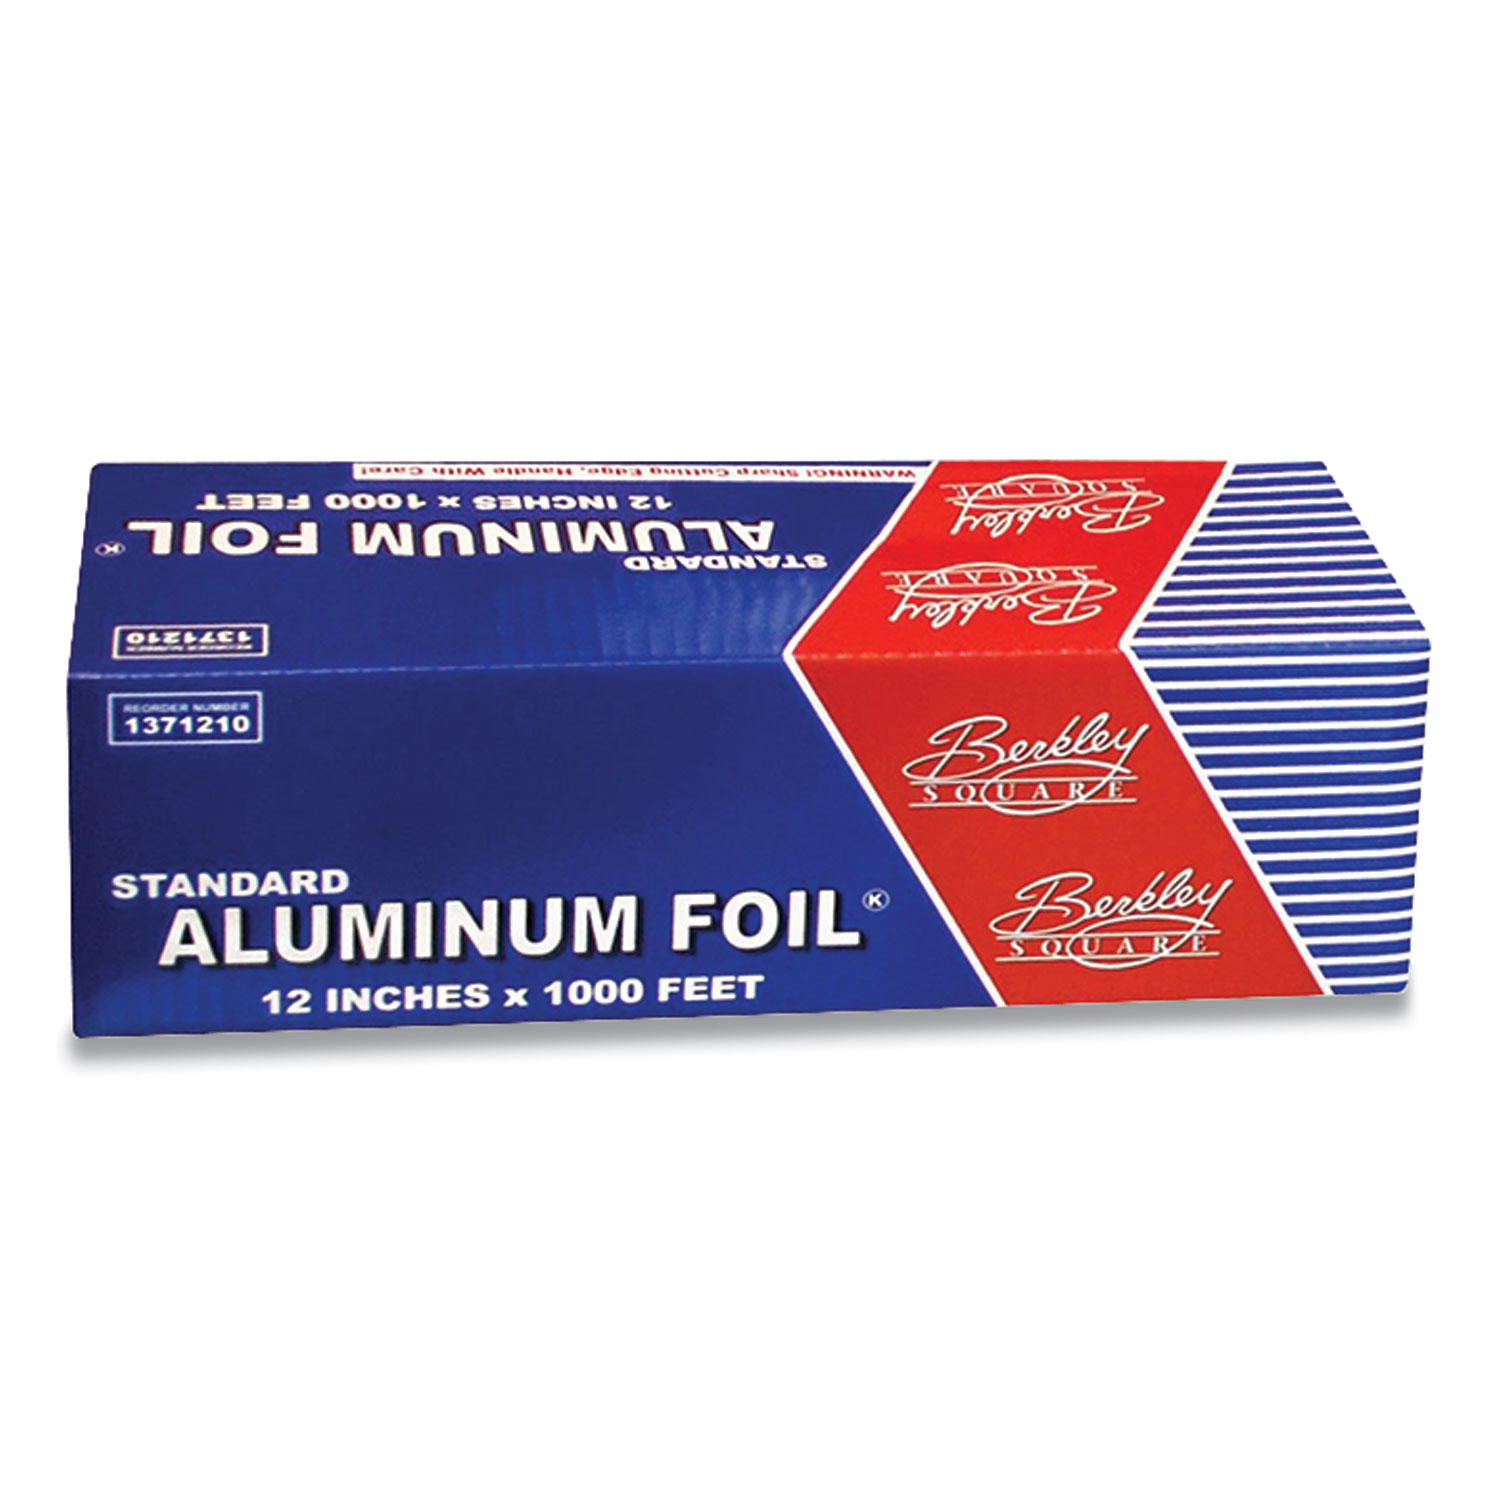 Berkley Square Standard Aluminum Foil Roll, 12 x 1,000 ft